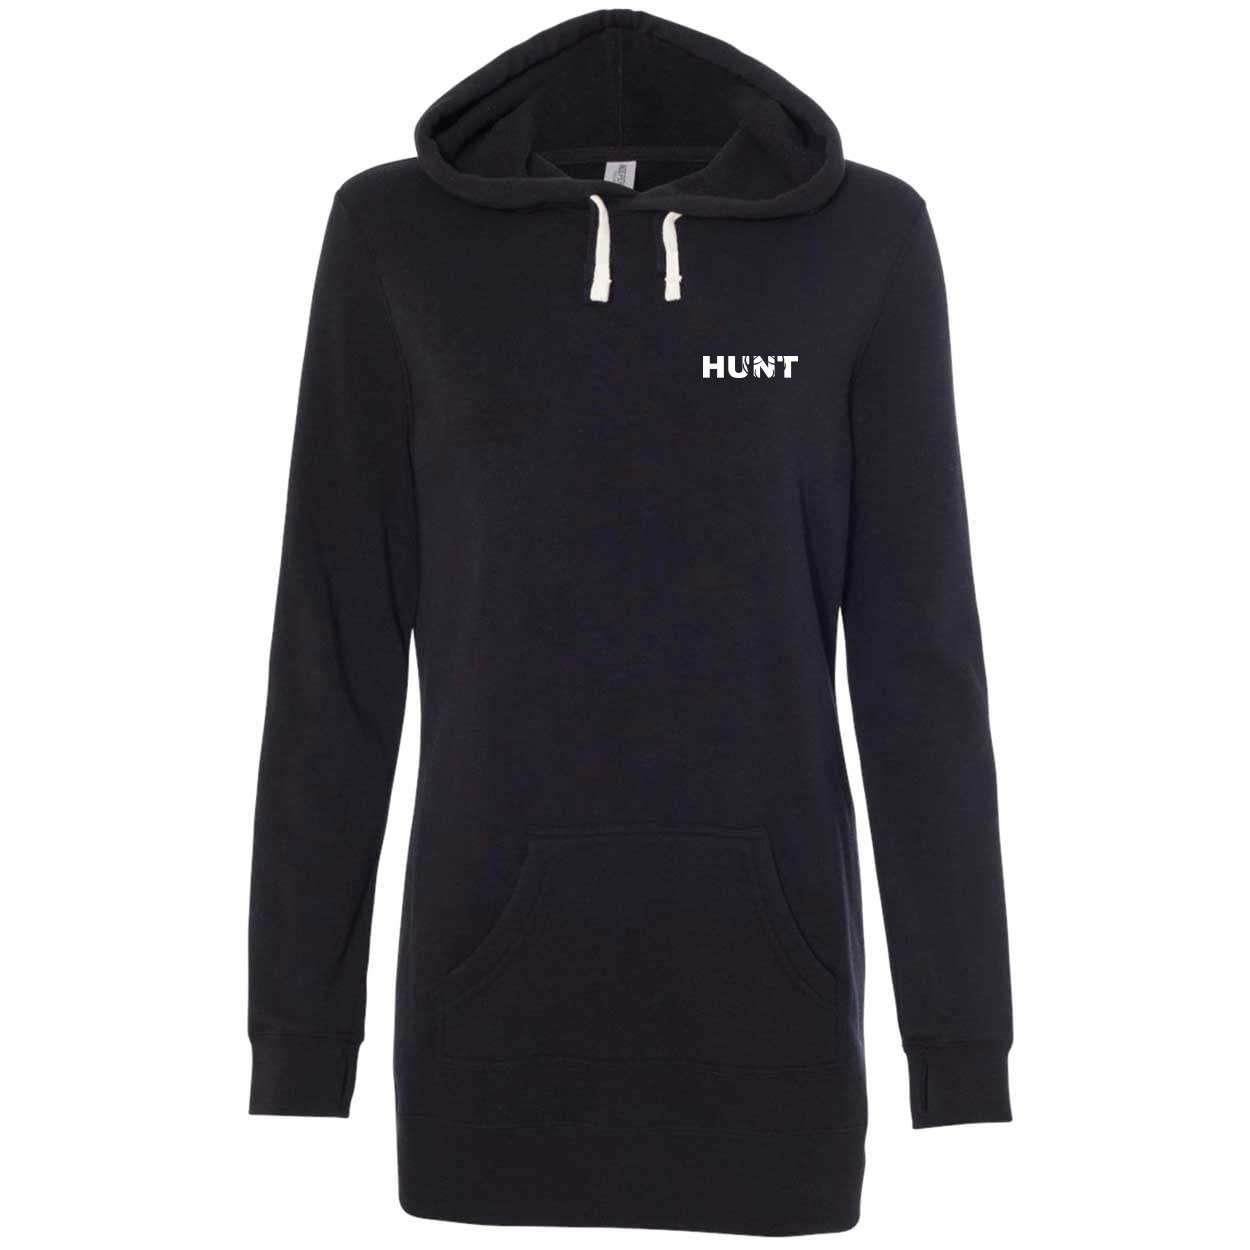 Hunt Rack Logo Night Out Womens Pullover Hooded Sweatshirt Dress Black